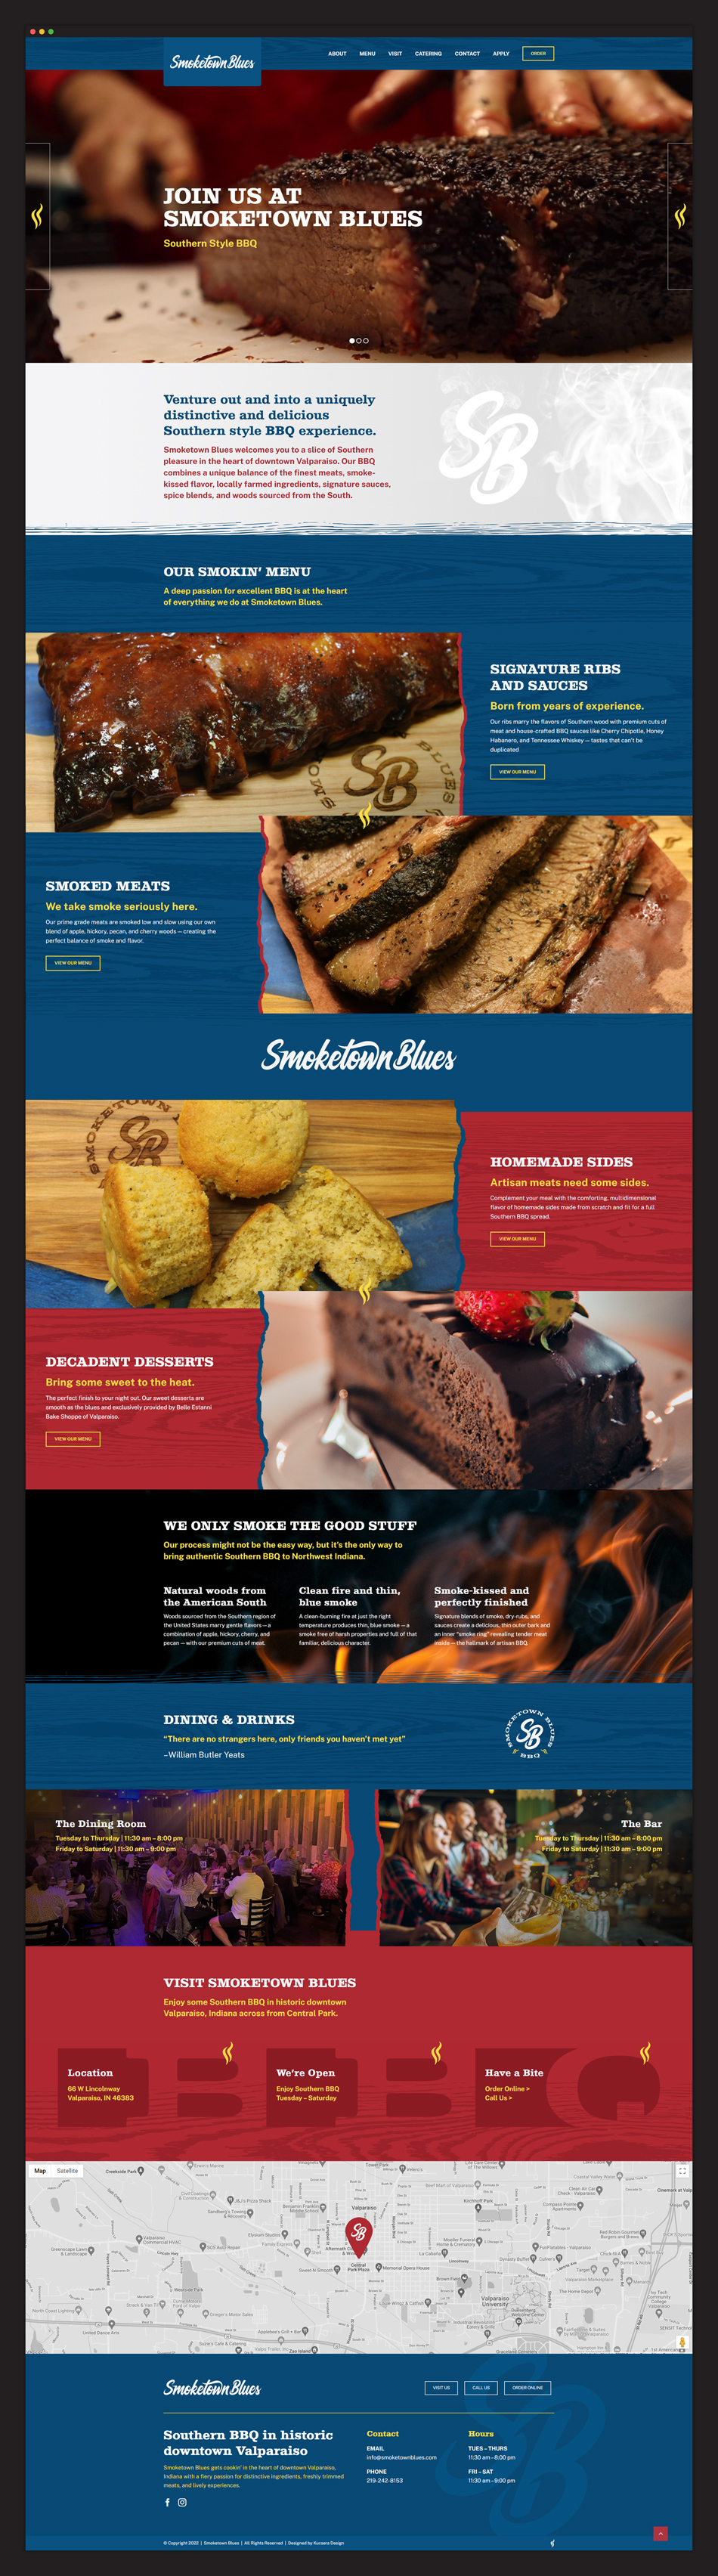 Smoketown Blues Barbecue website design